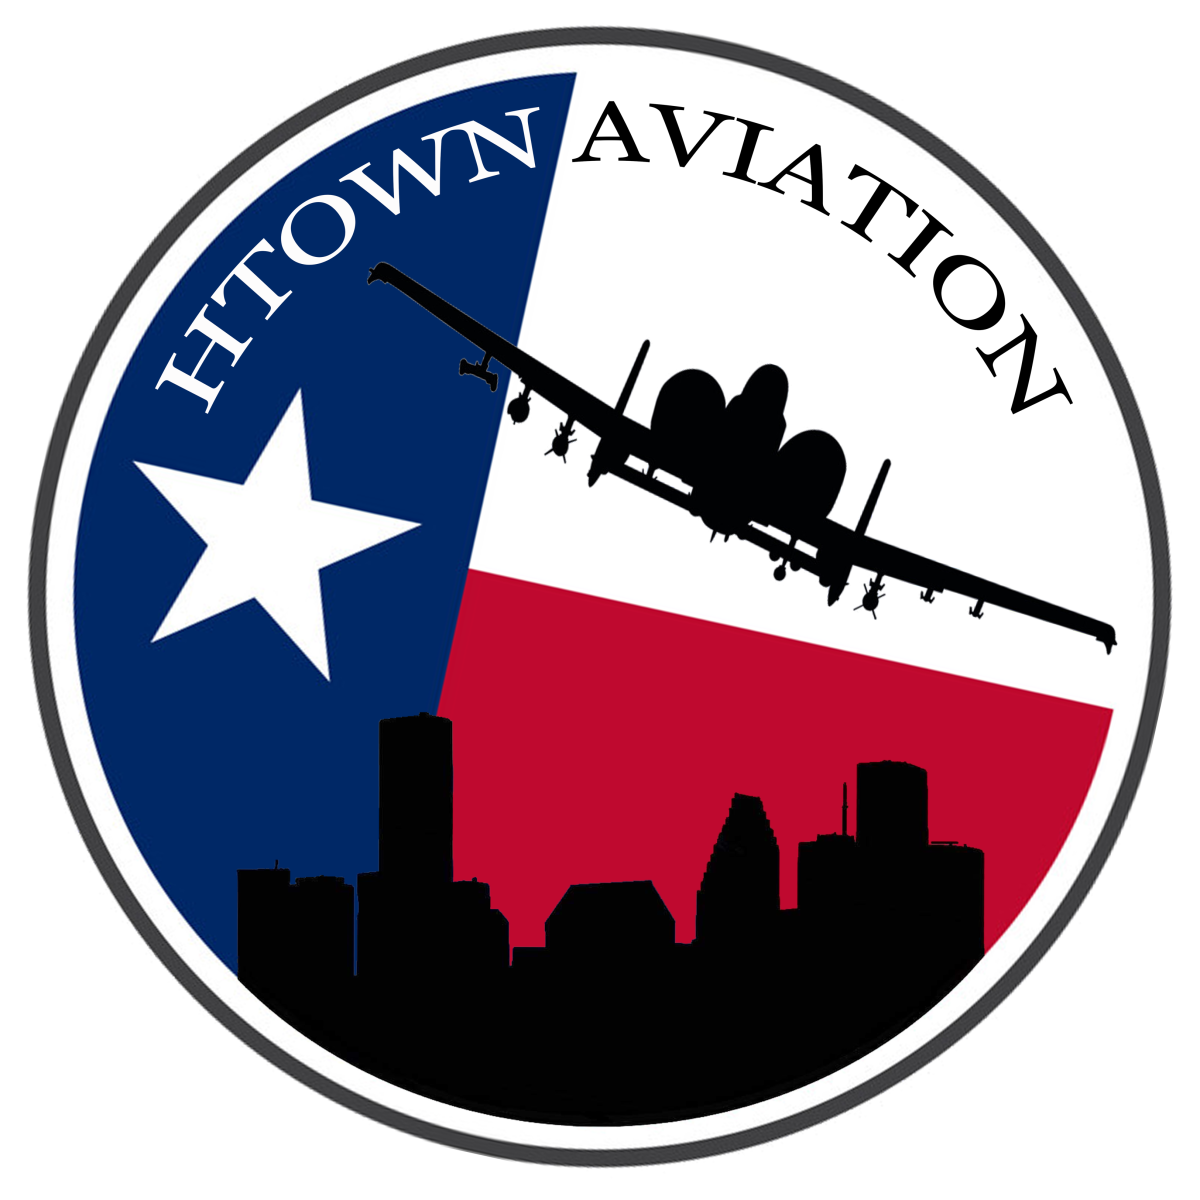 HTown Aviation Store